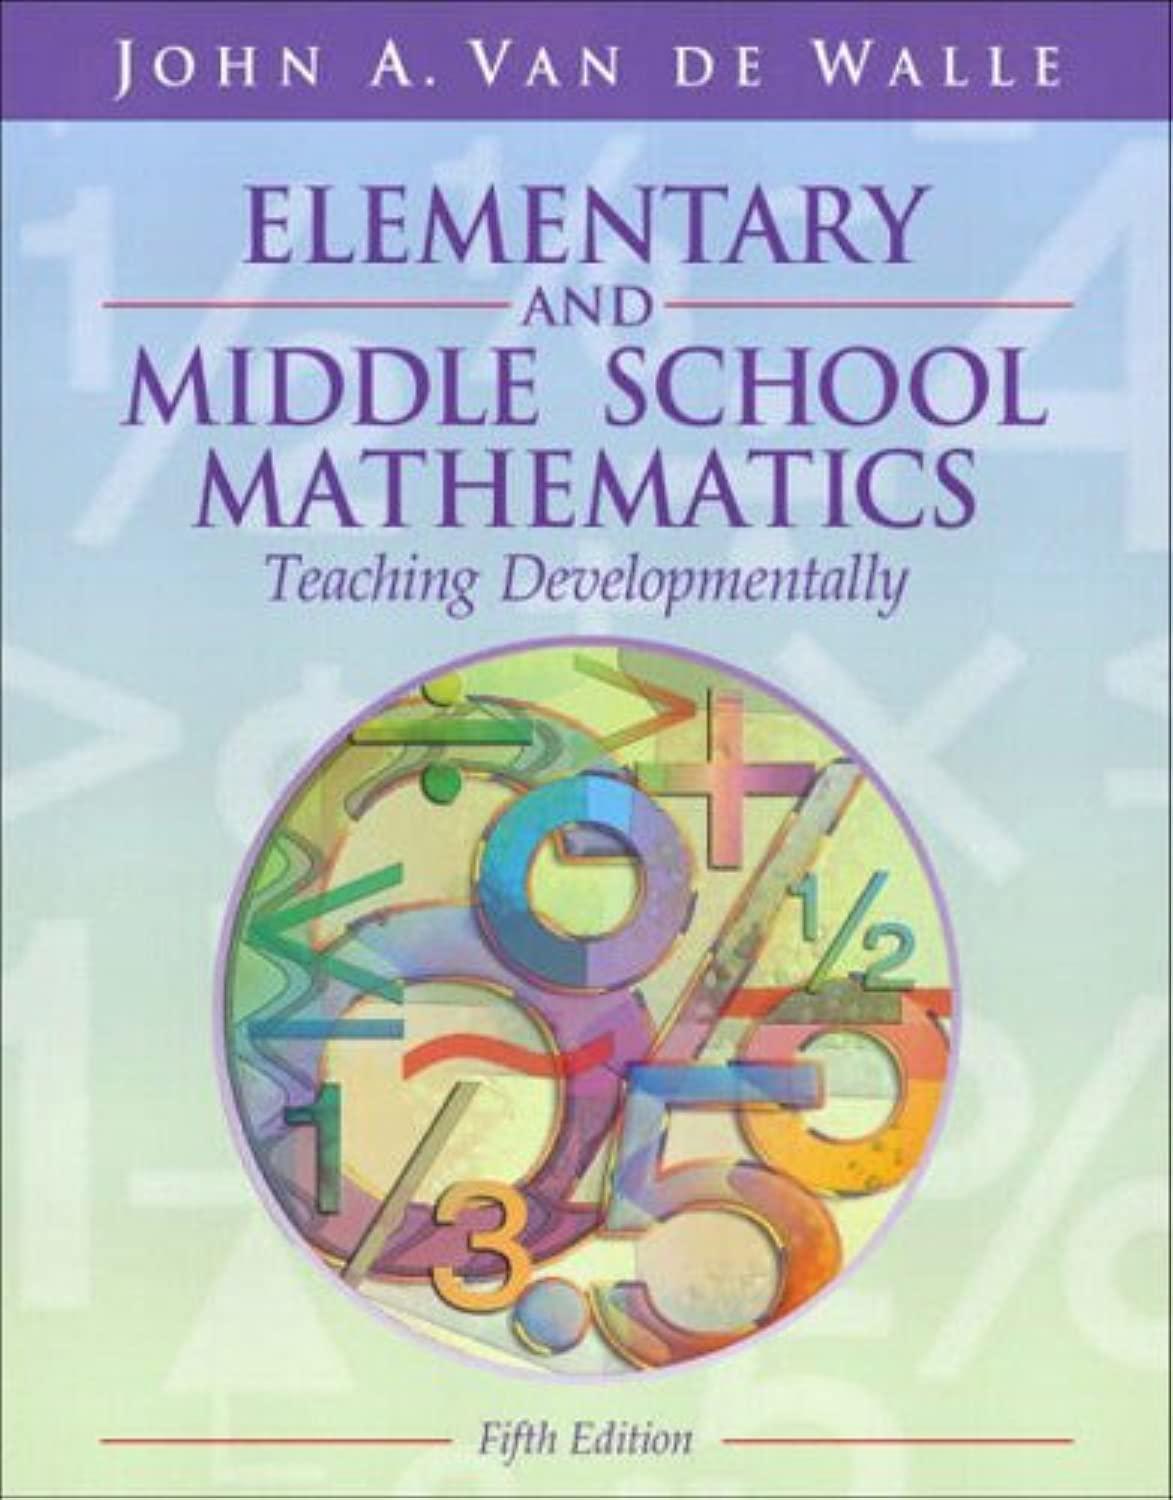 elementary and middle school mathematics teaching developmentally 5th edition john a. van de walle